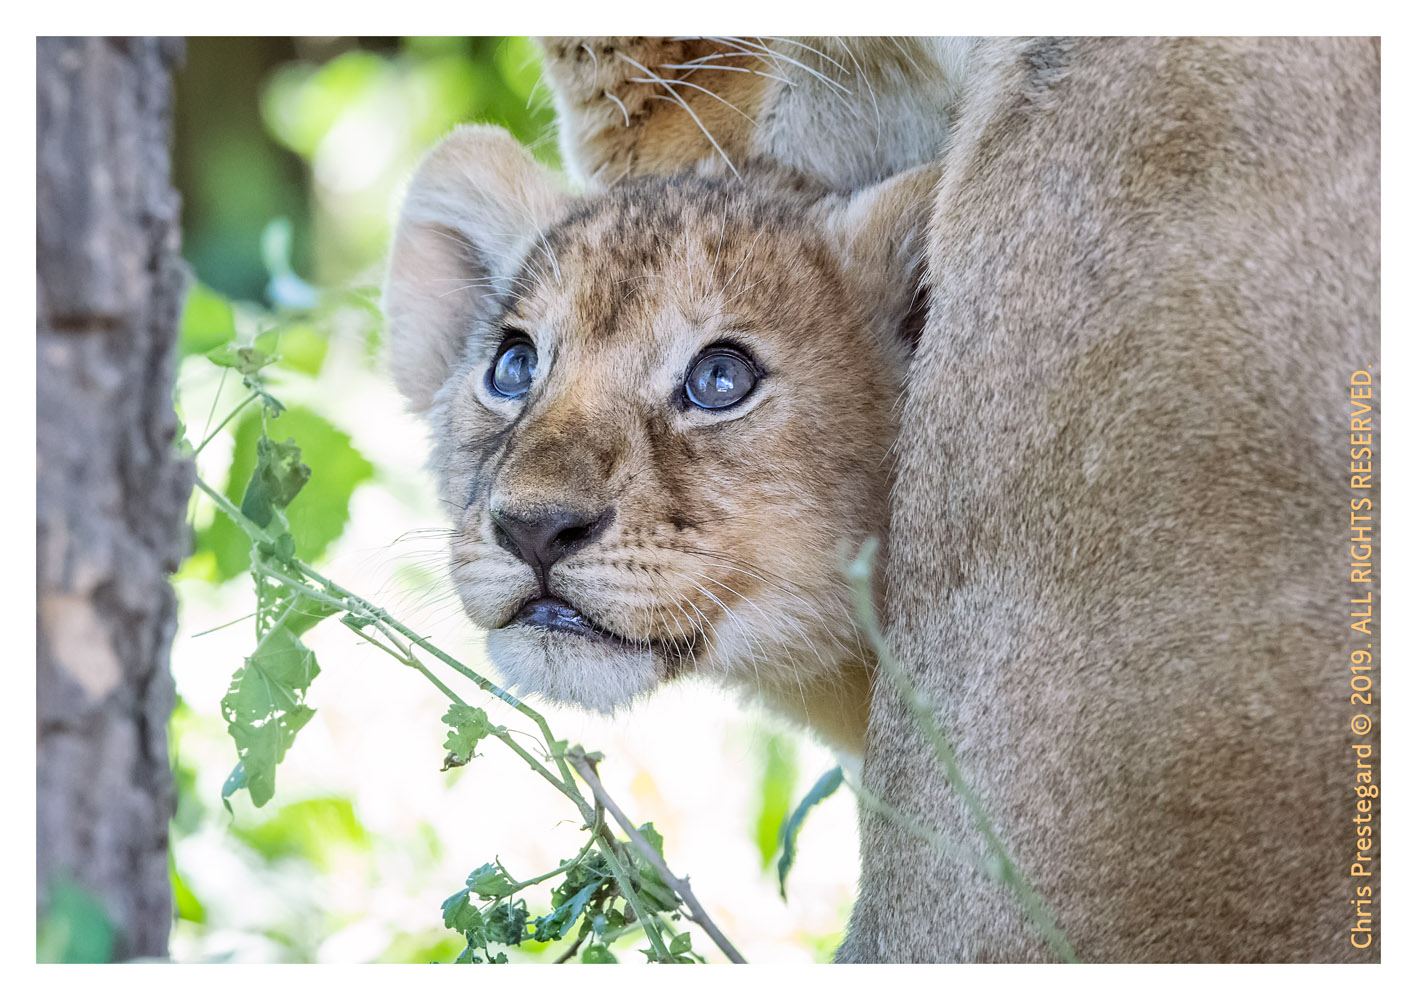 Lion cubs at Ndutu, Tanzania Feb. 2019